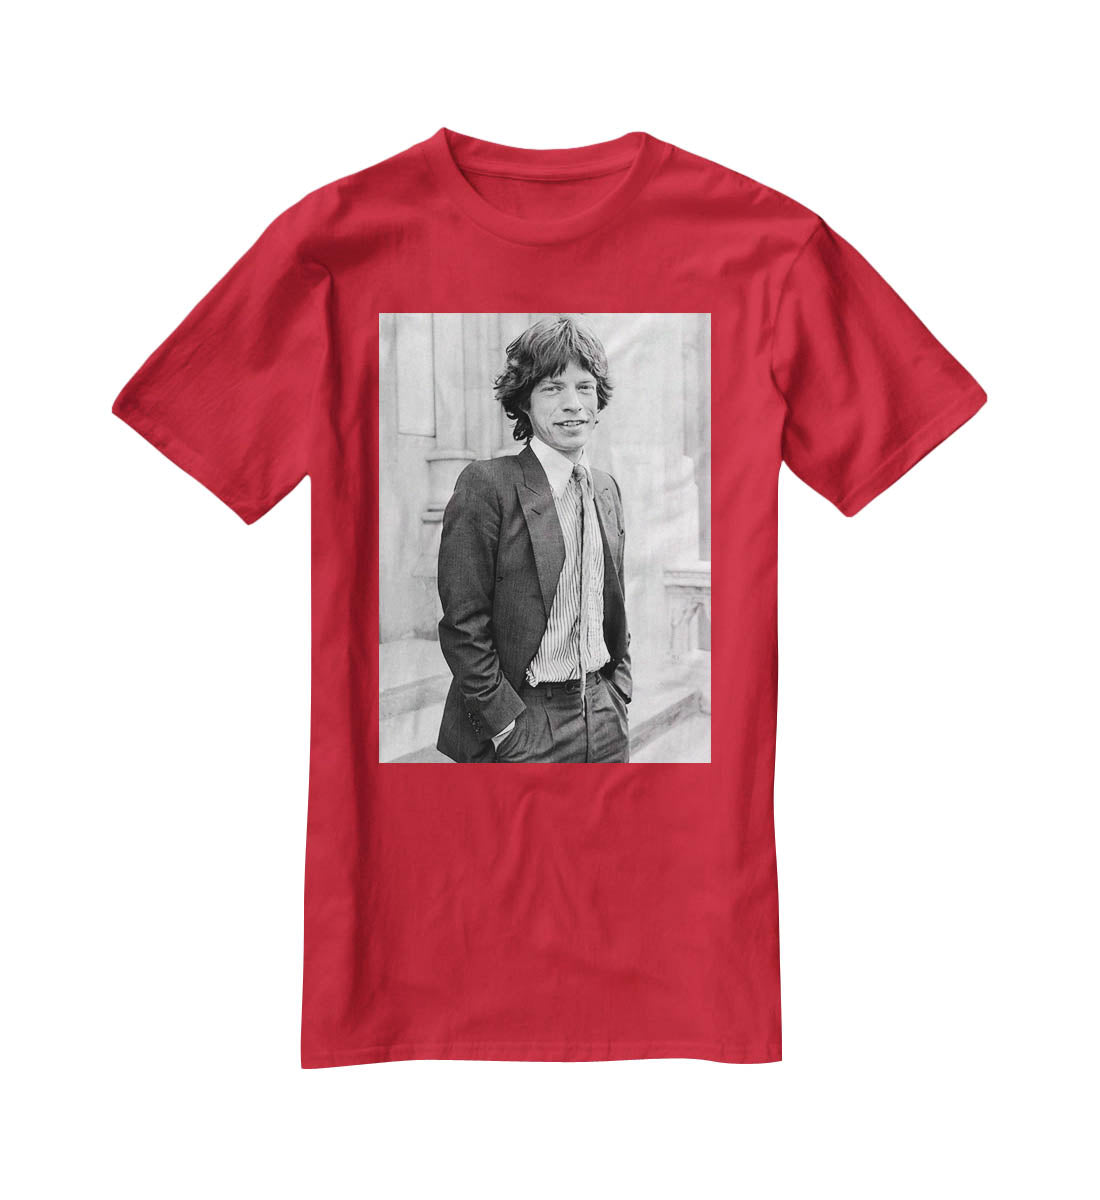 Mick Jagger in a tie T-Shirt - Canvas Art Rocks - 4